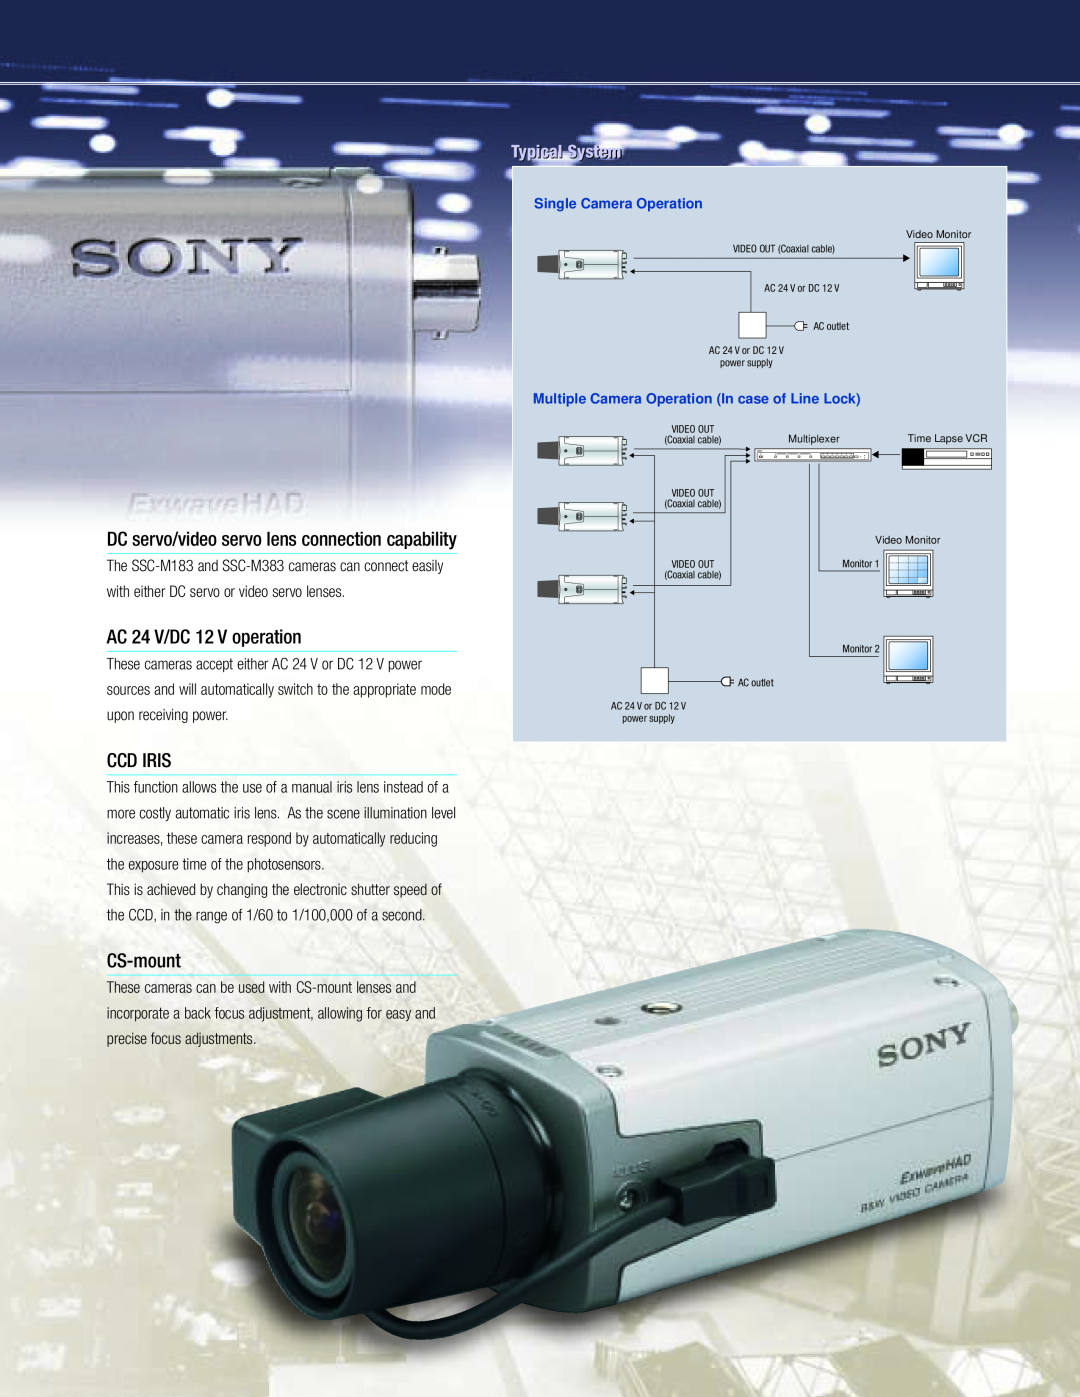 Sony SSC-M183, Ssc-M383 DC servo/video servo lens connection capability, AC 24 V/DC 12 V operation, Ccd Iris, CS-mount 